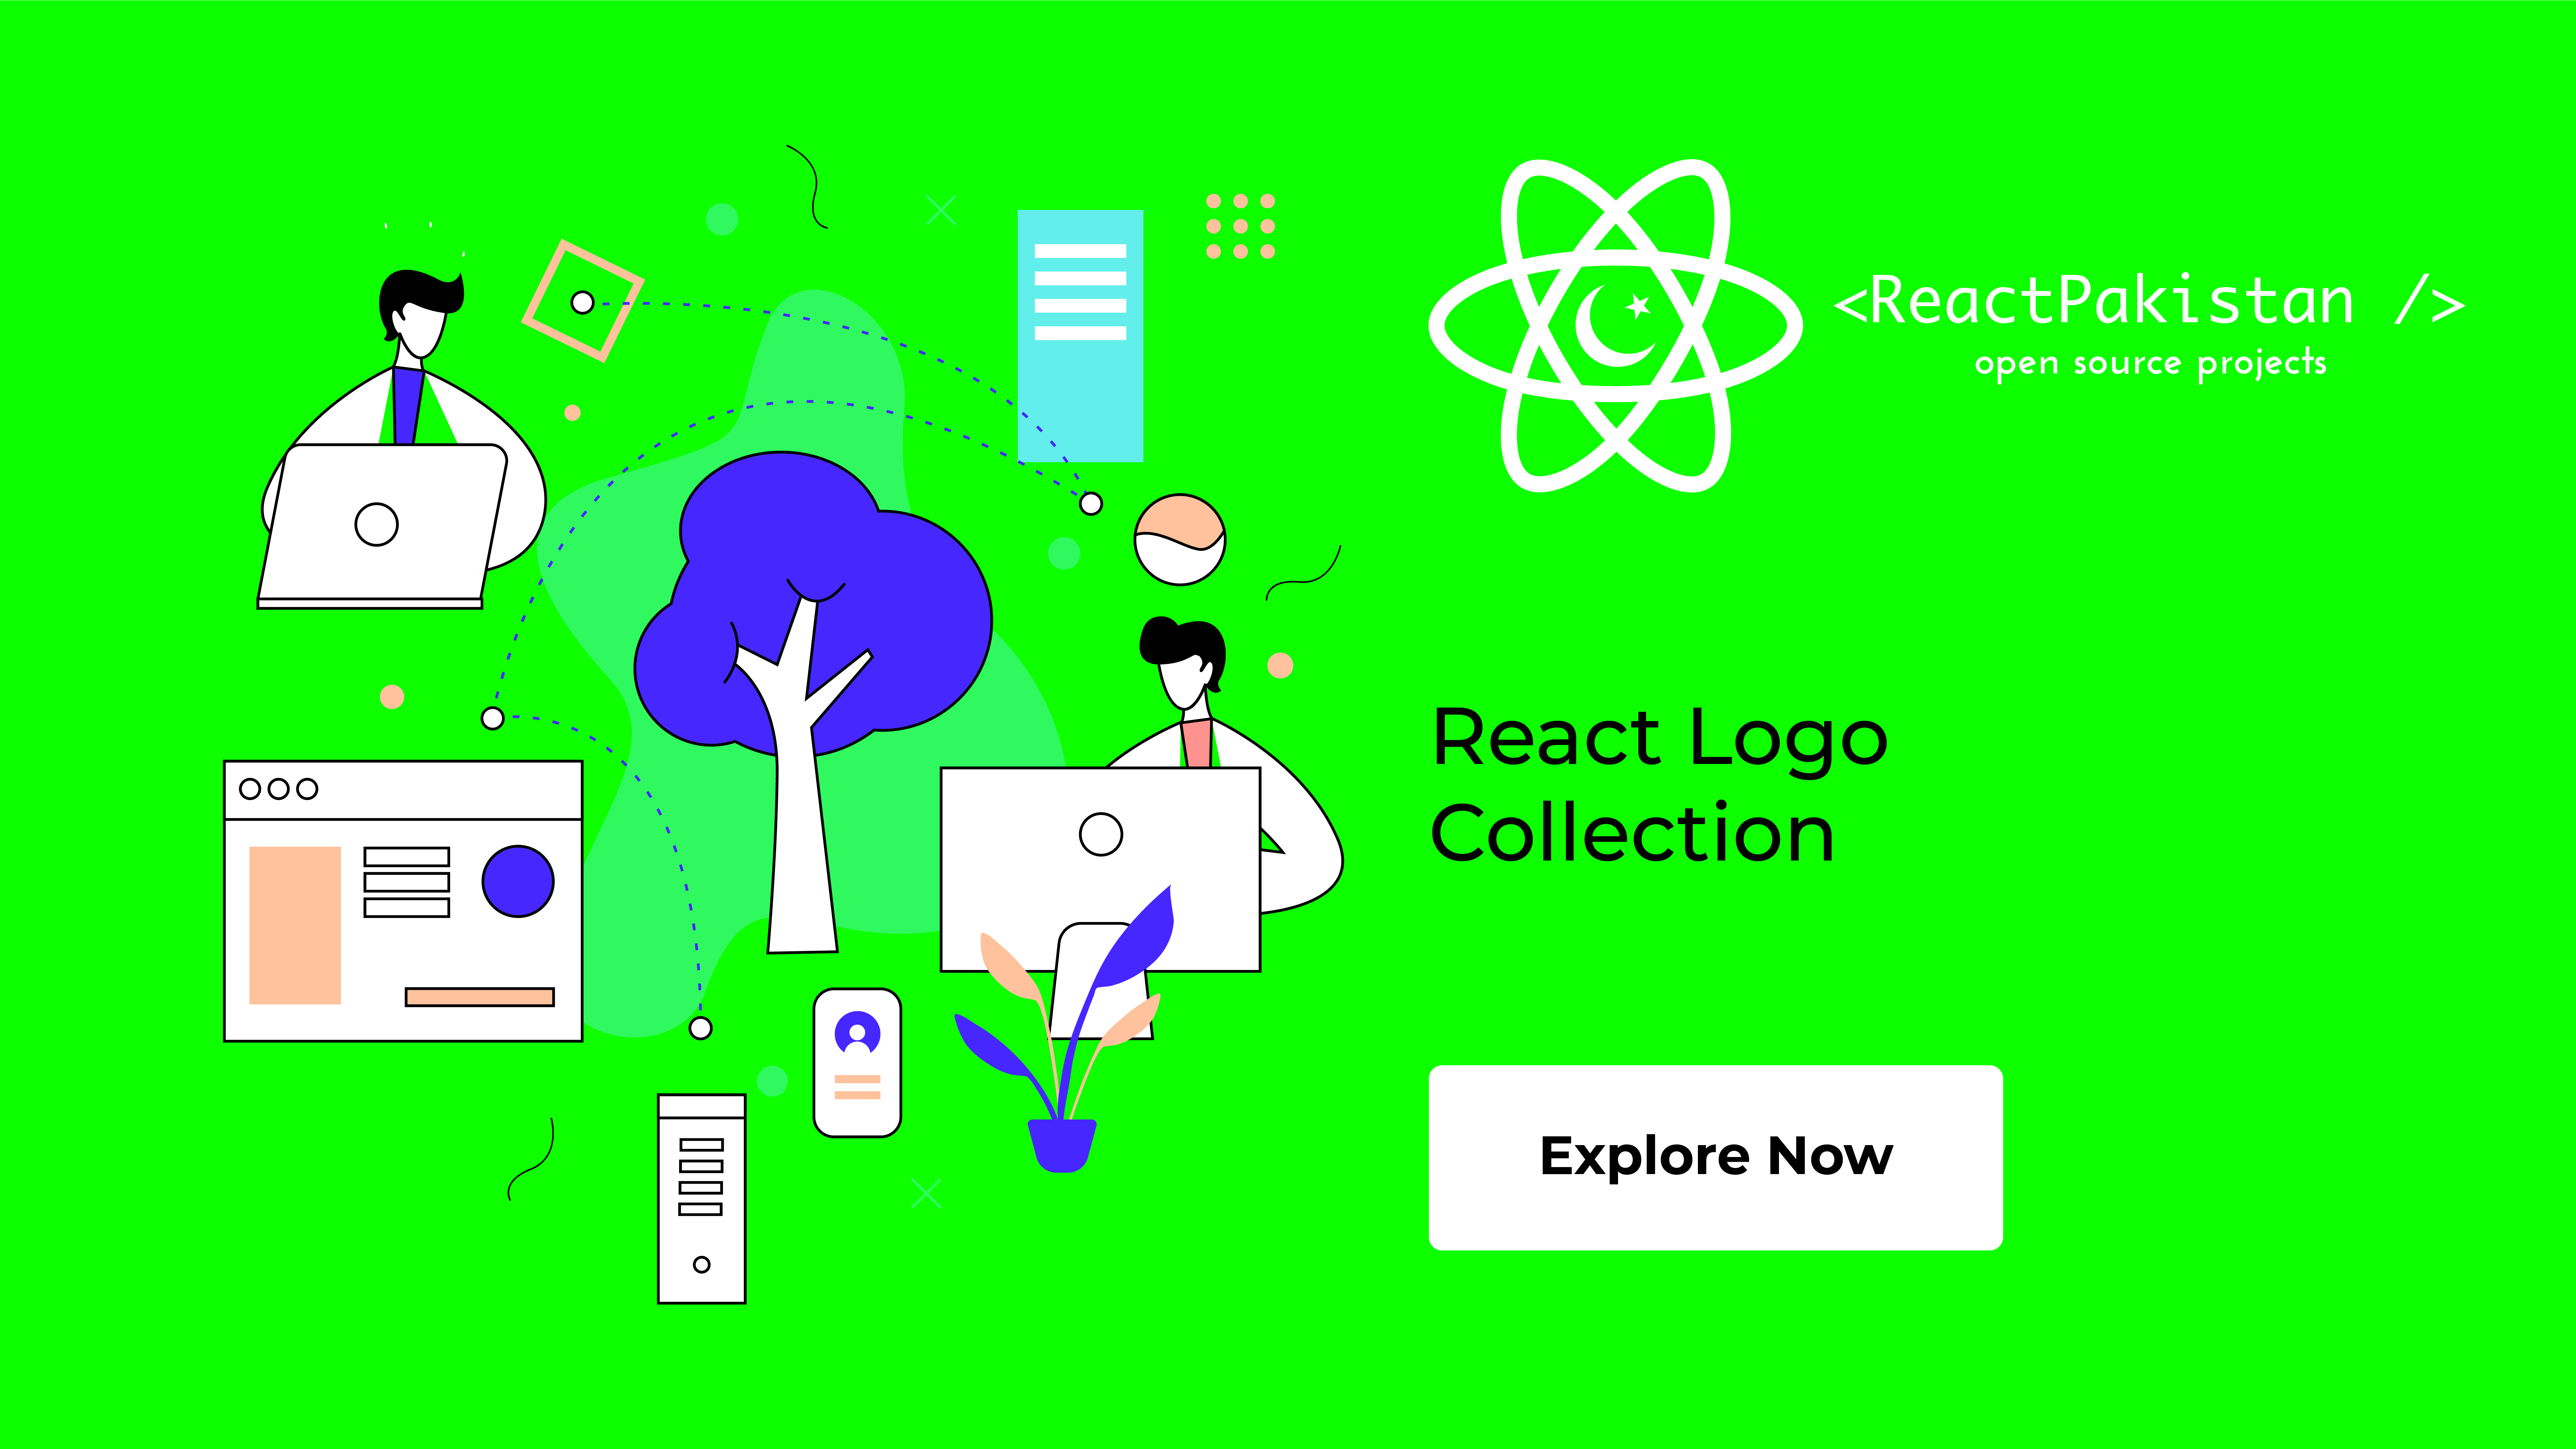 React Pakistan - React Logo Collection